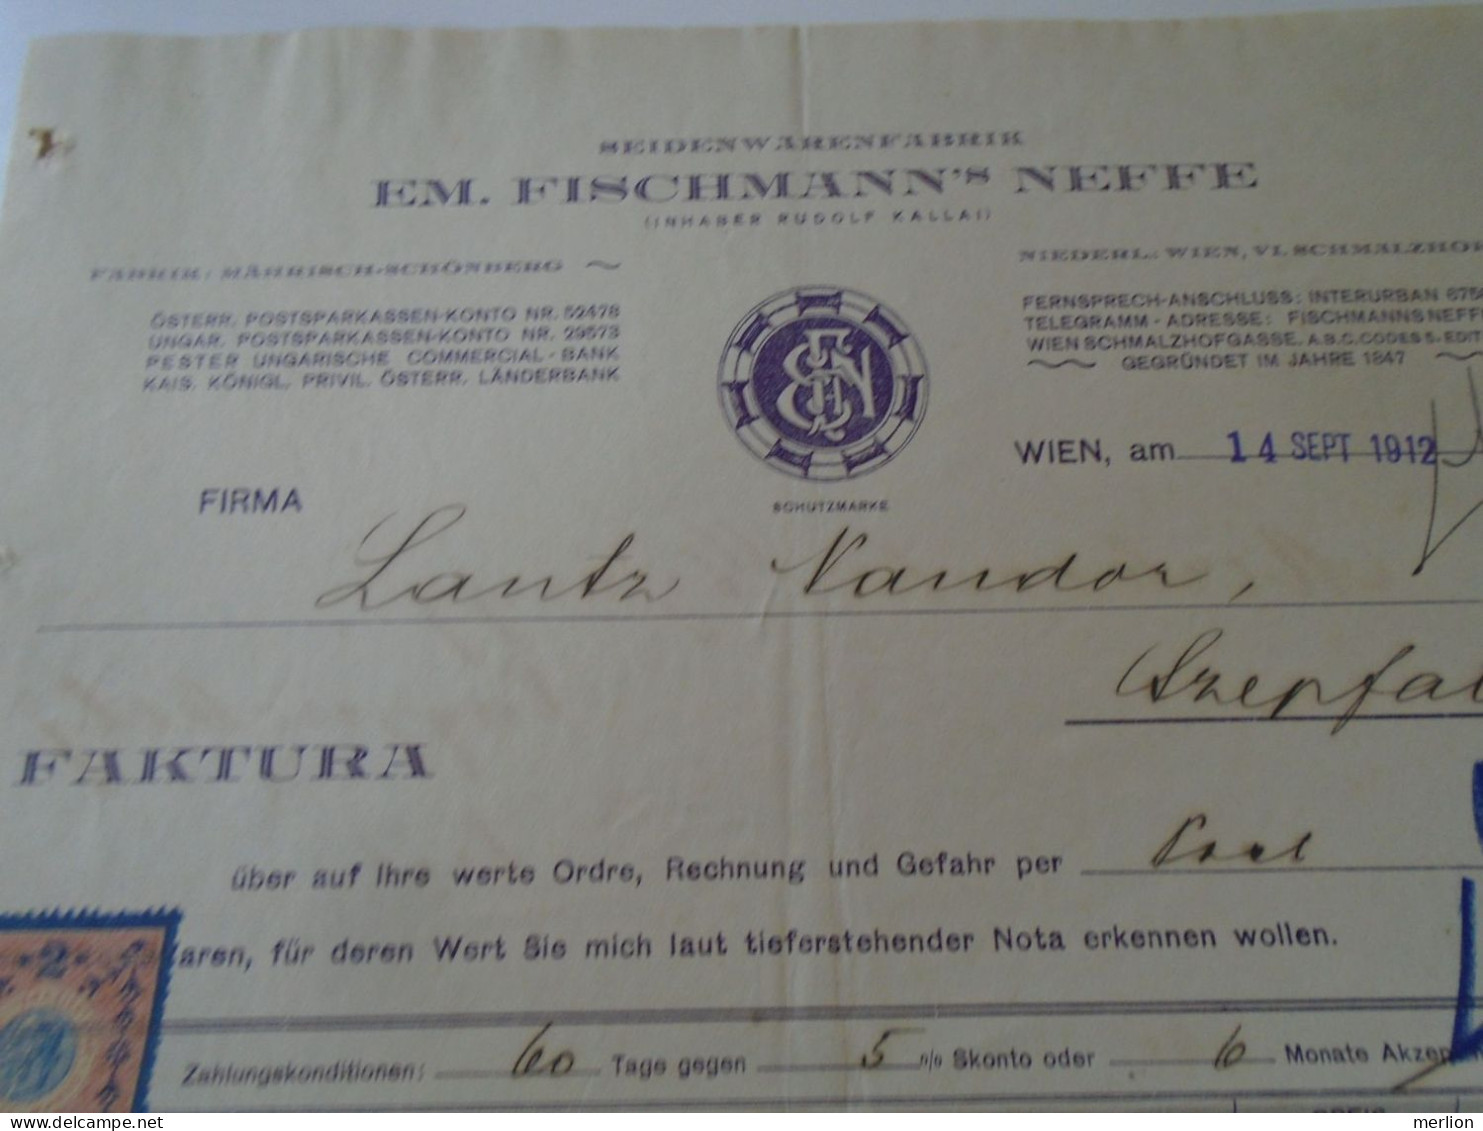 ZA470.28 Old Invoice  Austria -Em. Fischmann's Neffe  WIEN 1912 Sent To Nandor LANTZ Temesszépfalu Banat Hungary Romania - Autriche